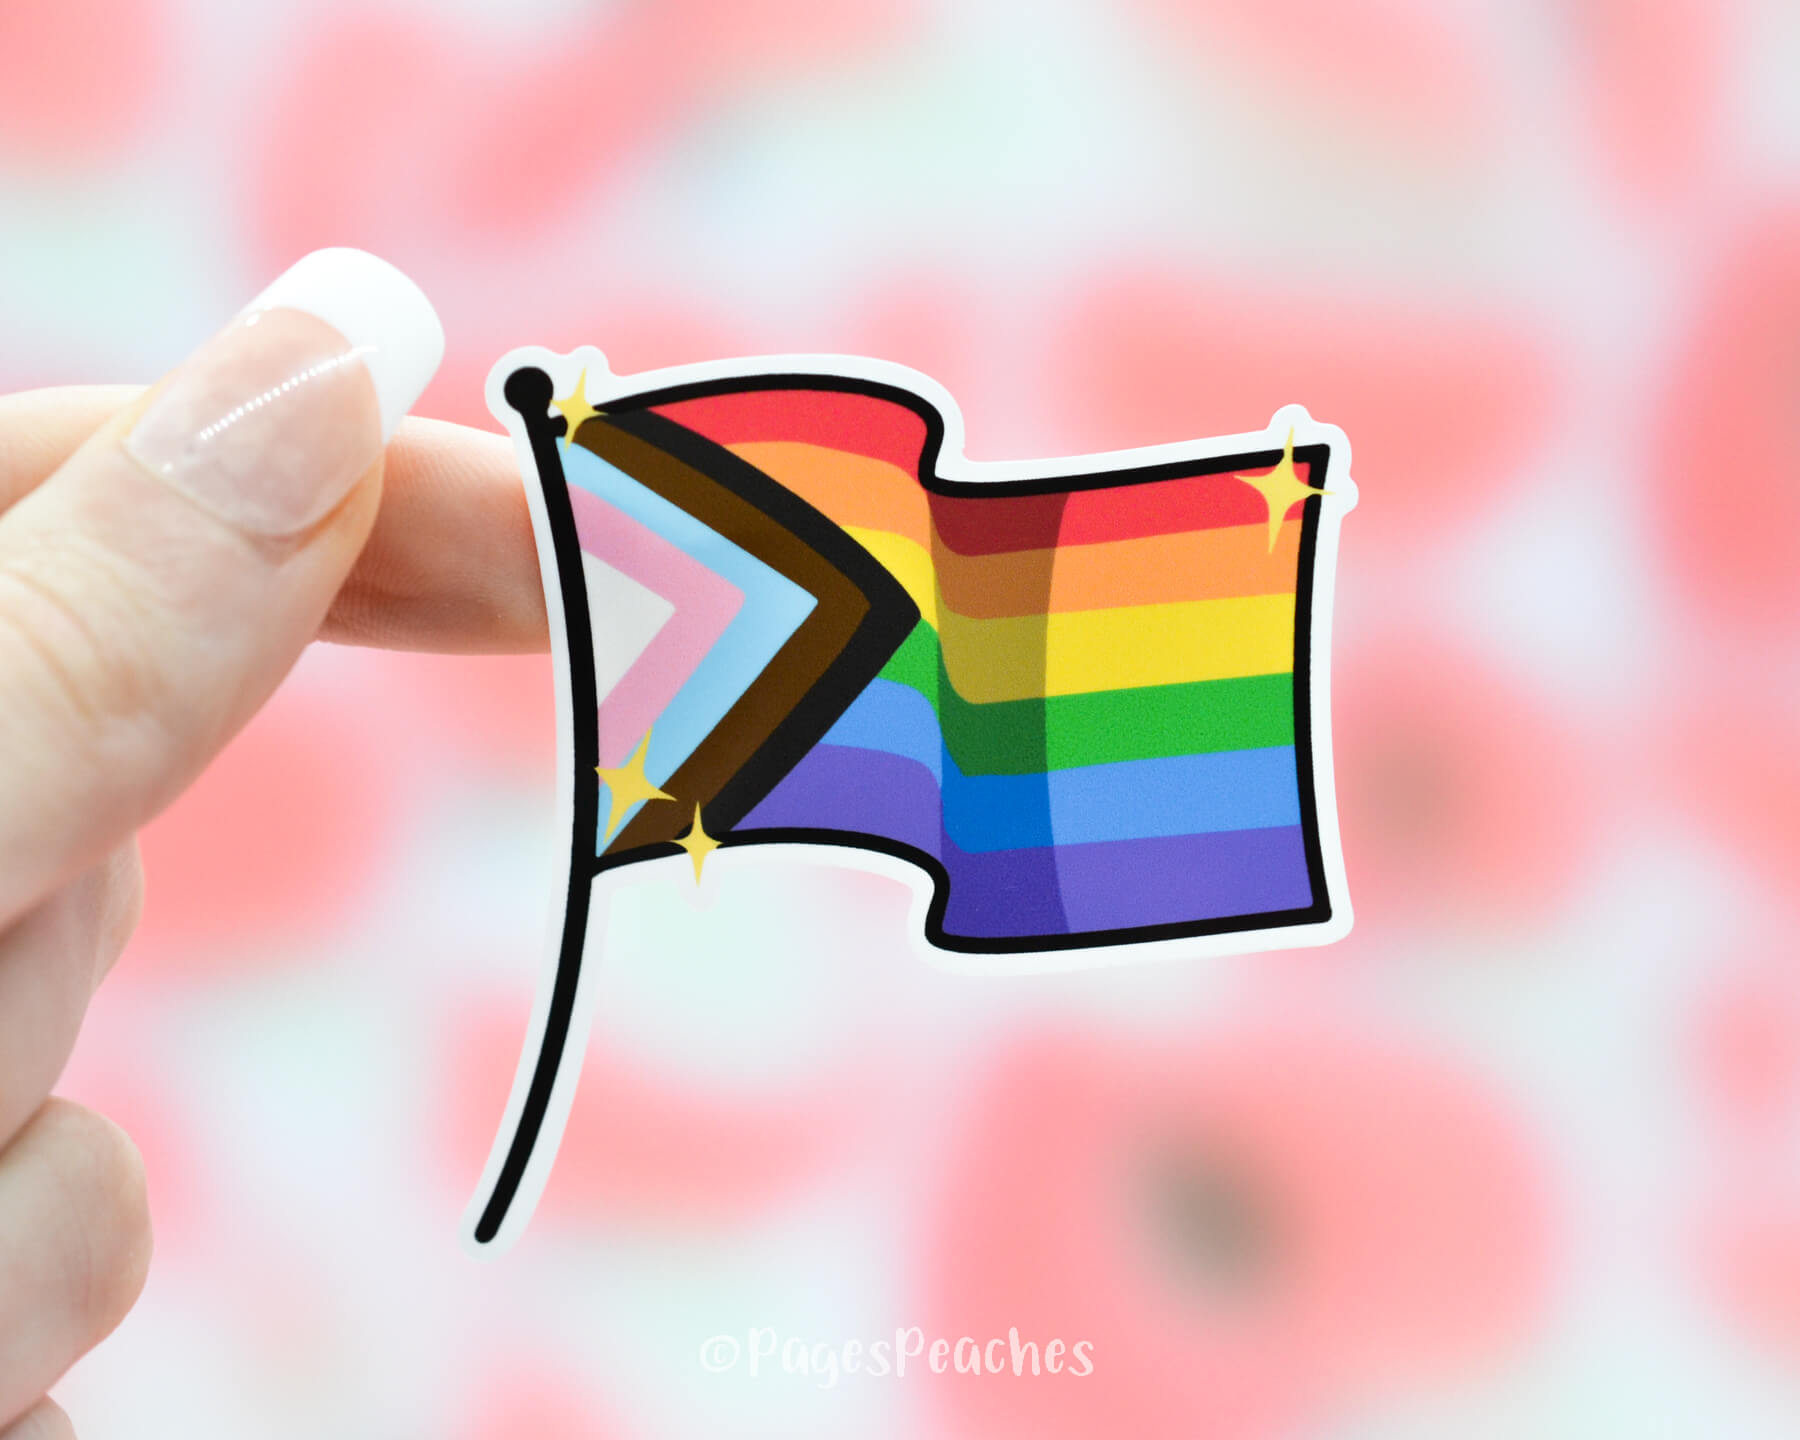 Sticker of an Inclusive LGBTQ progress pride flag with sparkles